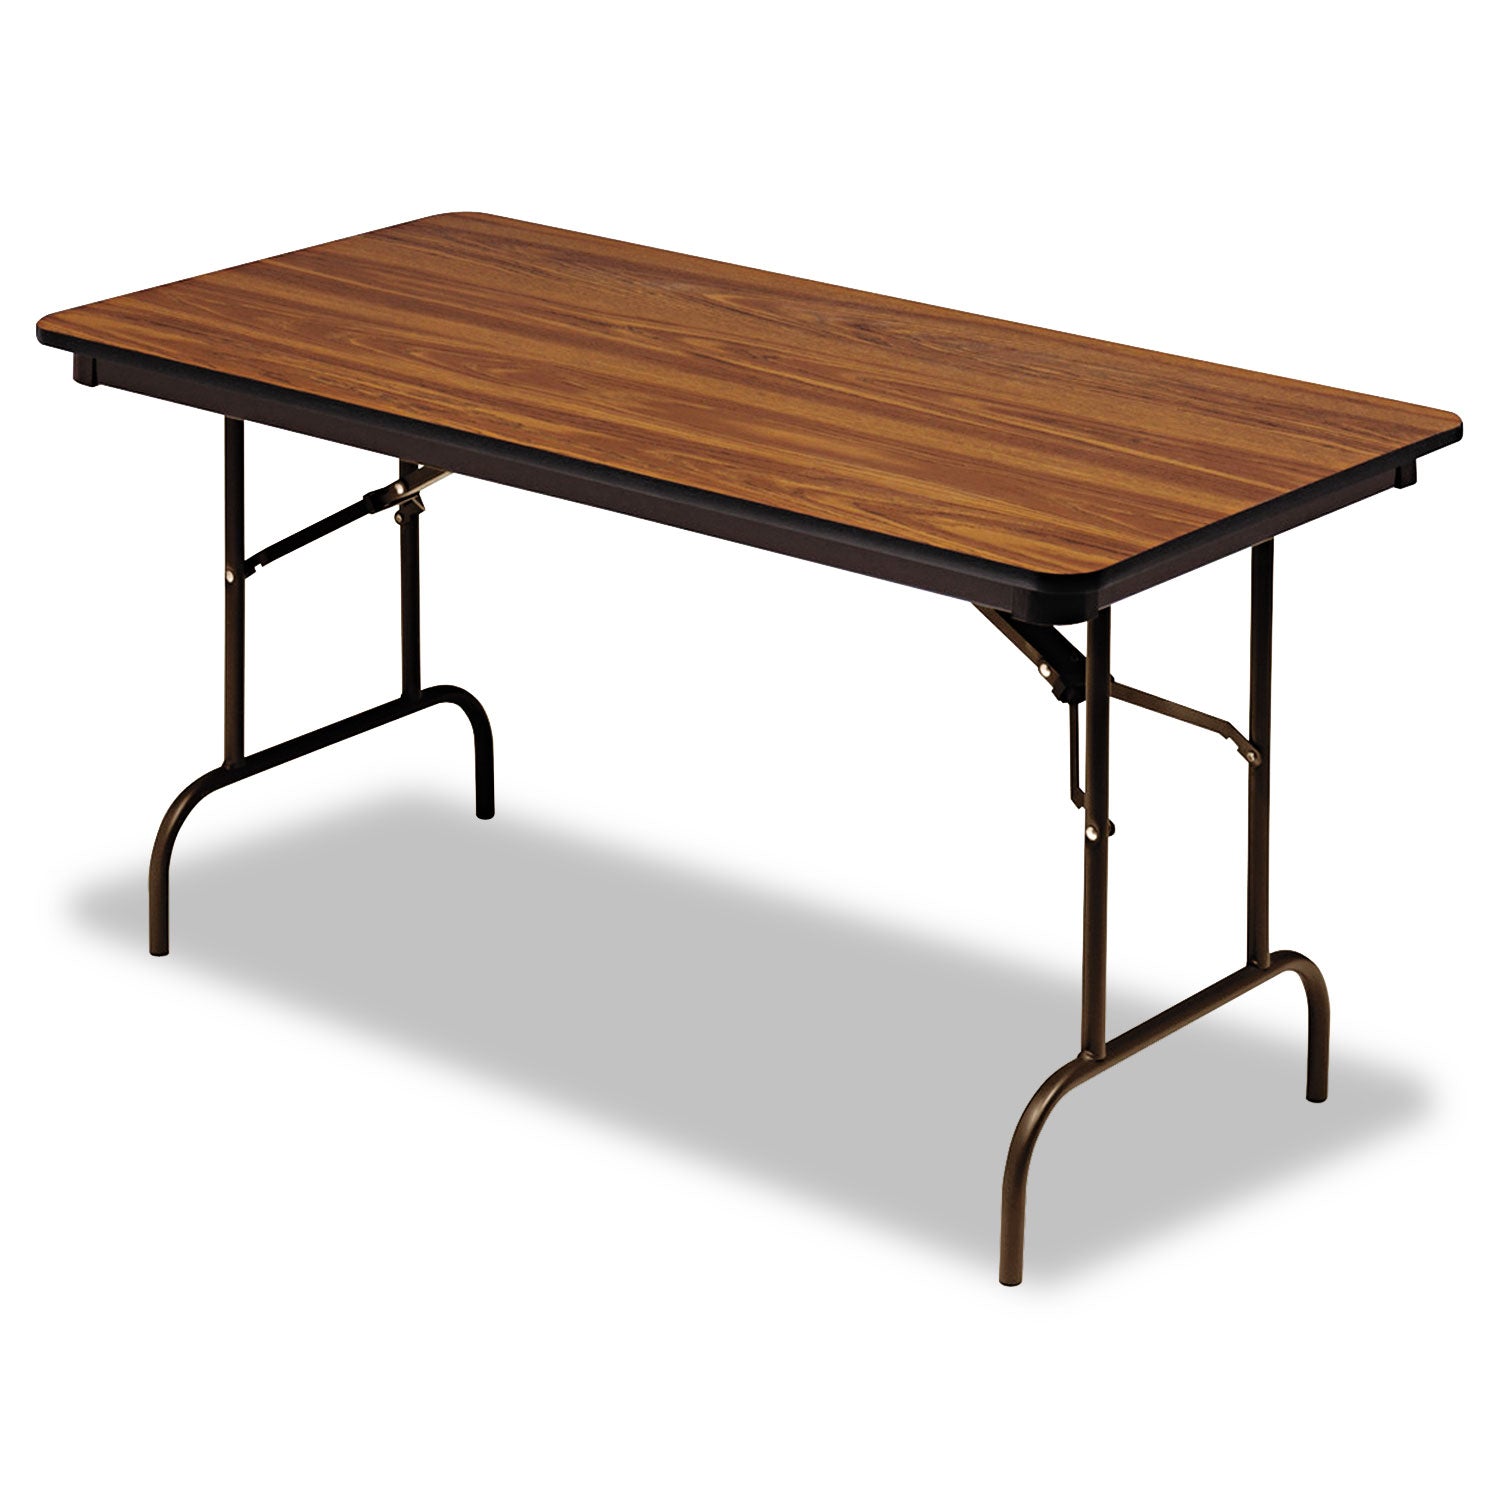 OfficeWorks Commercial Wood-Laminate Folding Table, Rectangular, 60" x 30" x 29", Oak - 